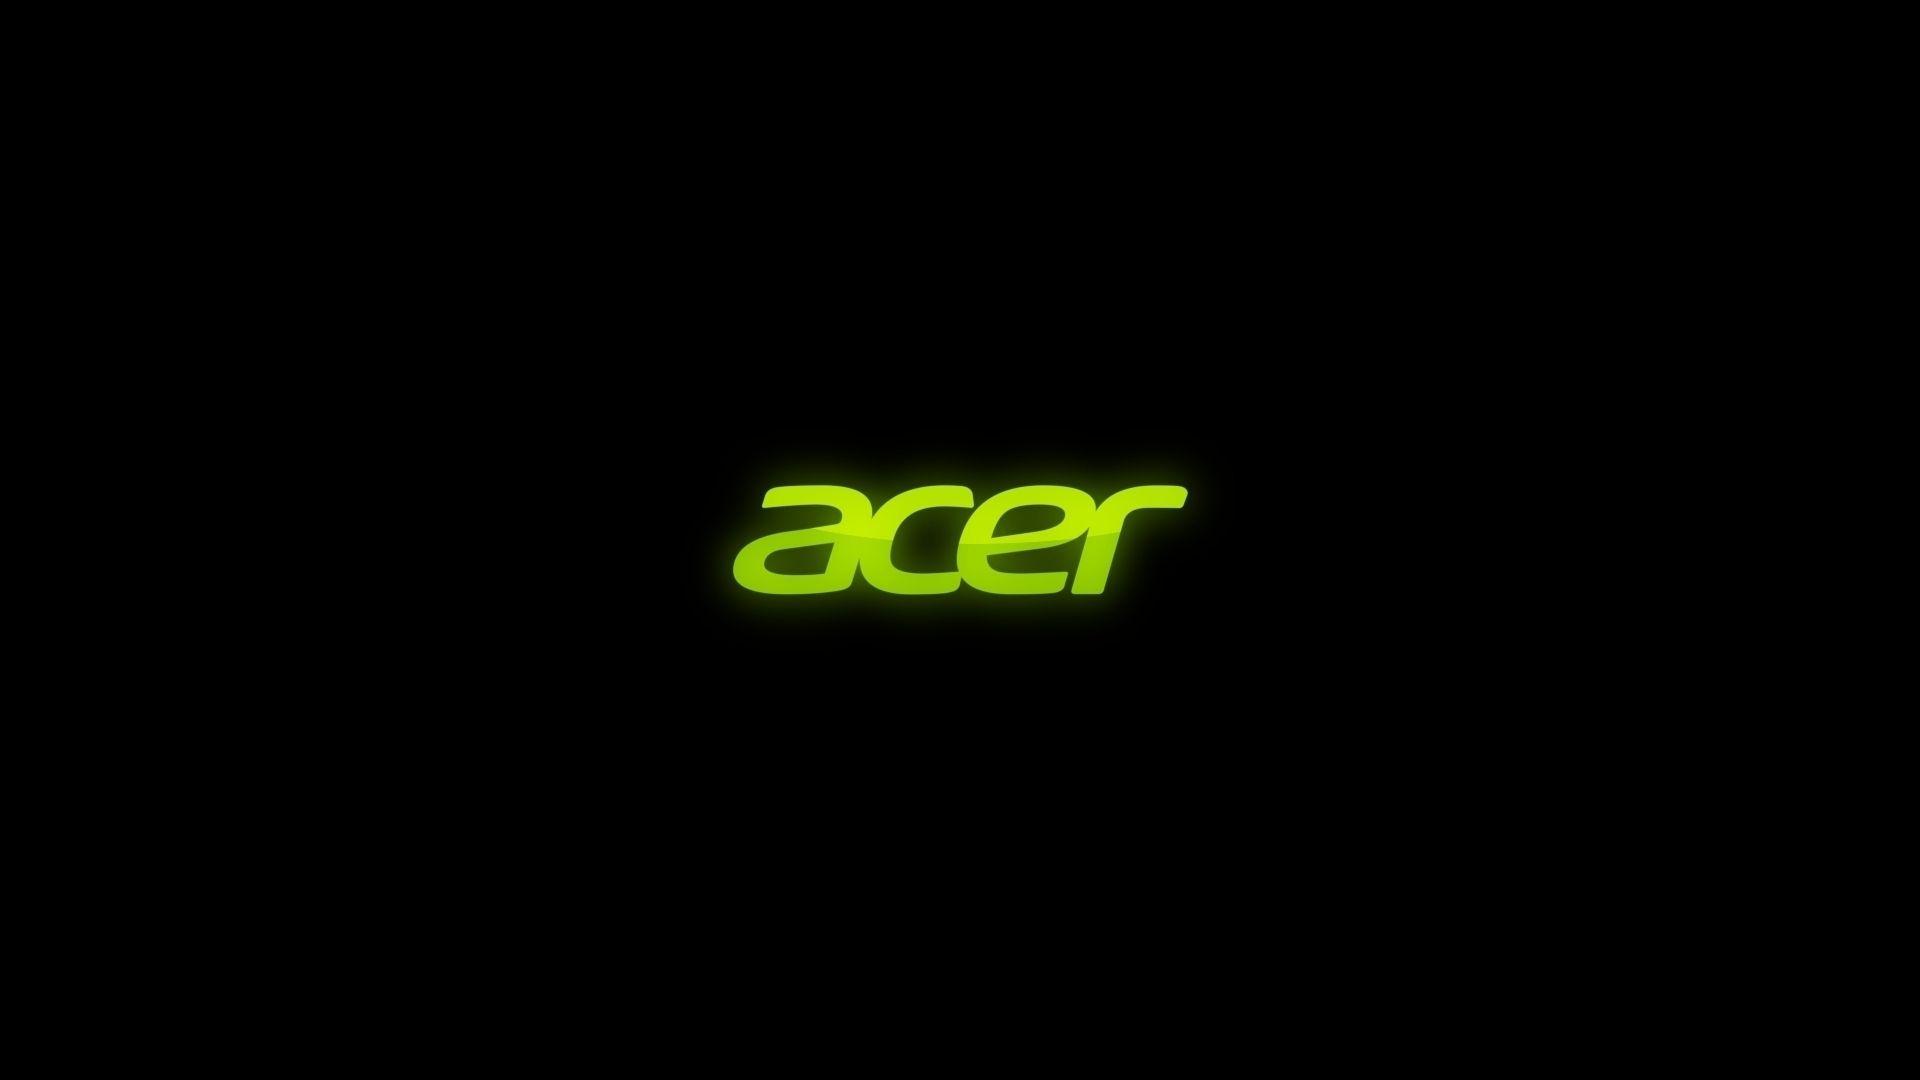 Acer Logo Wallpaper 19178 1920x1080 px